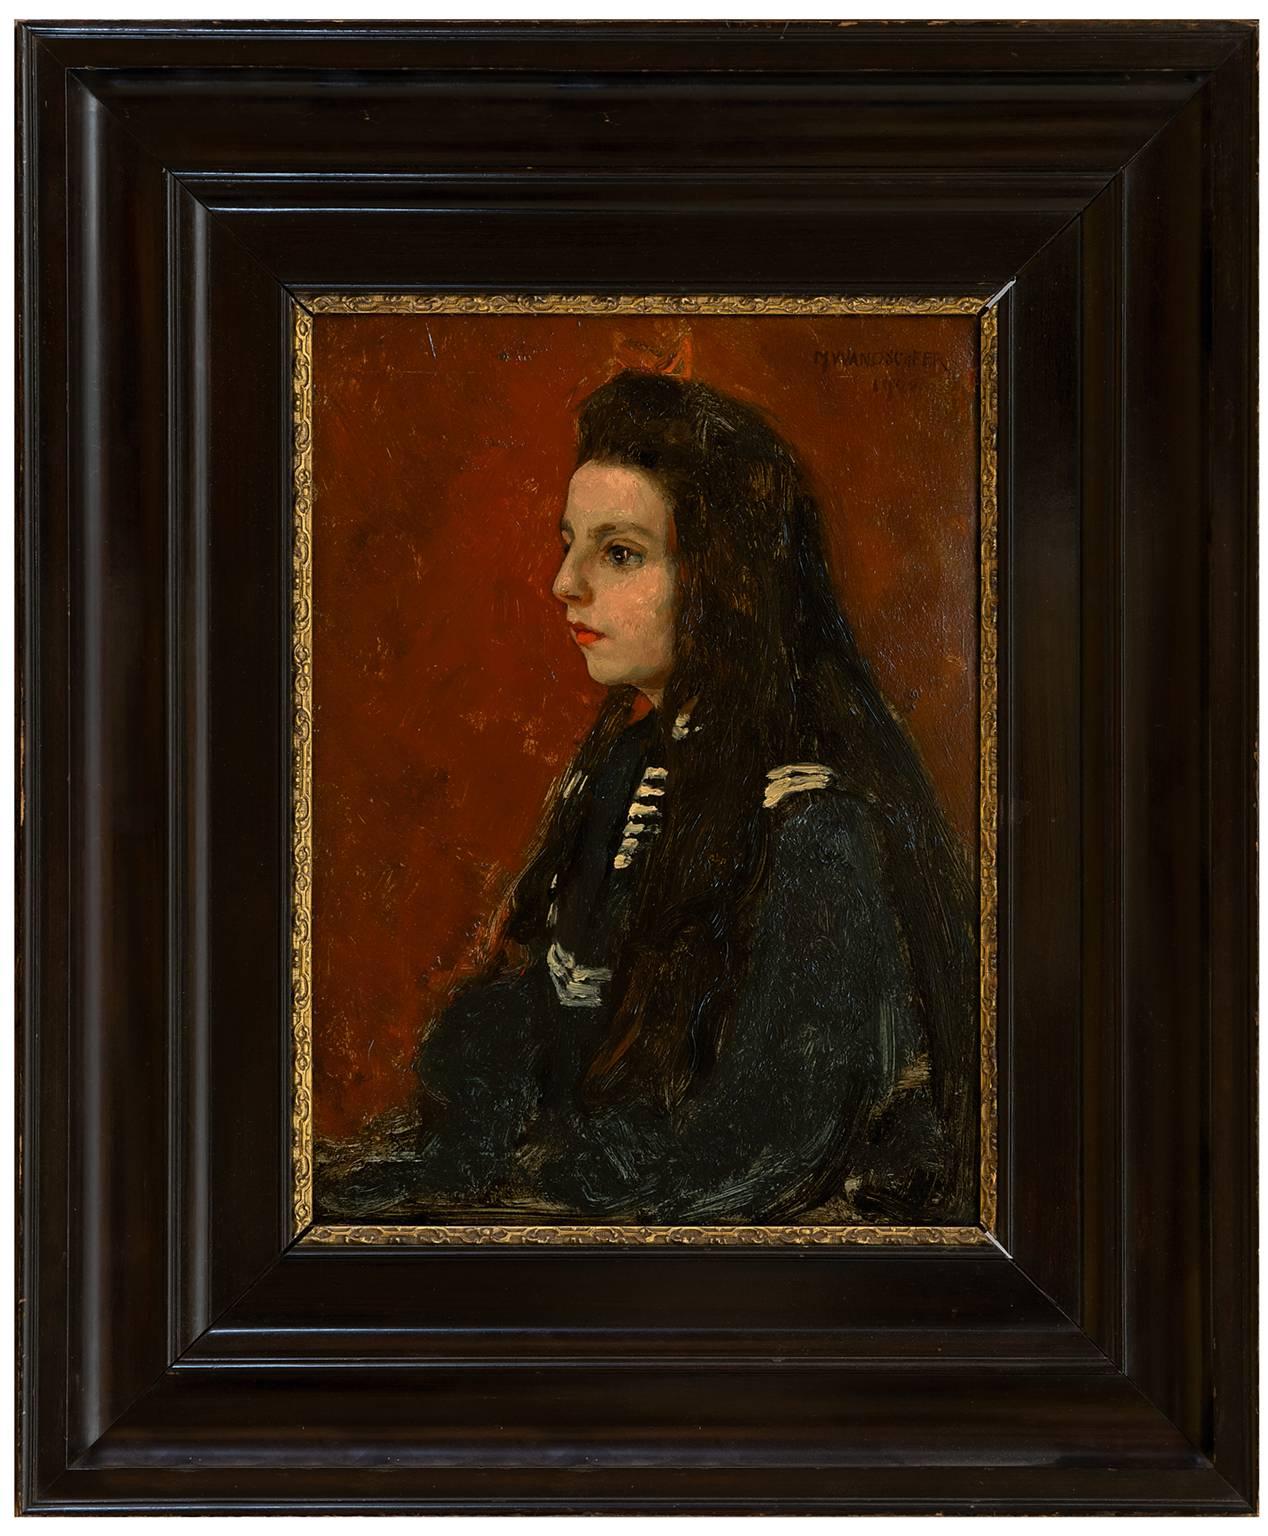 Maria Wilhelmina Wandscheer Portrait Painting - Portrait of Lucia W. Thueré